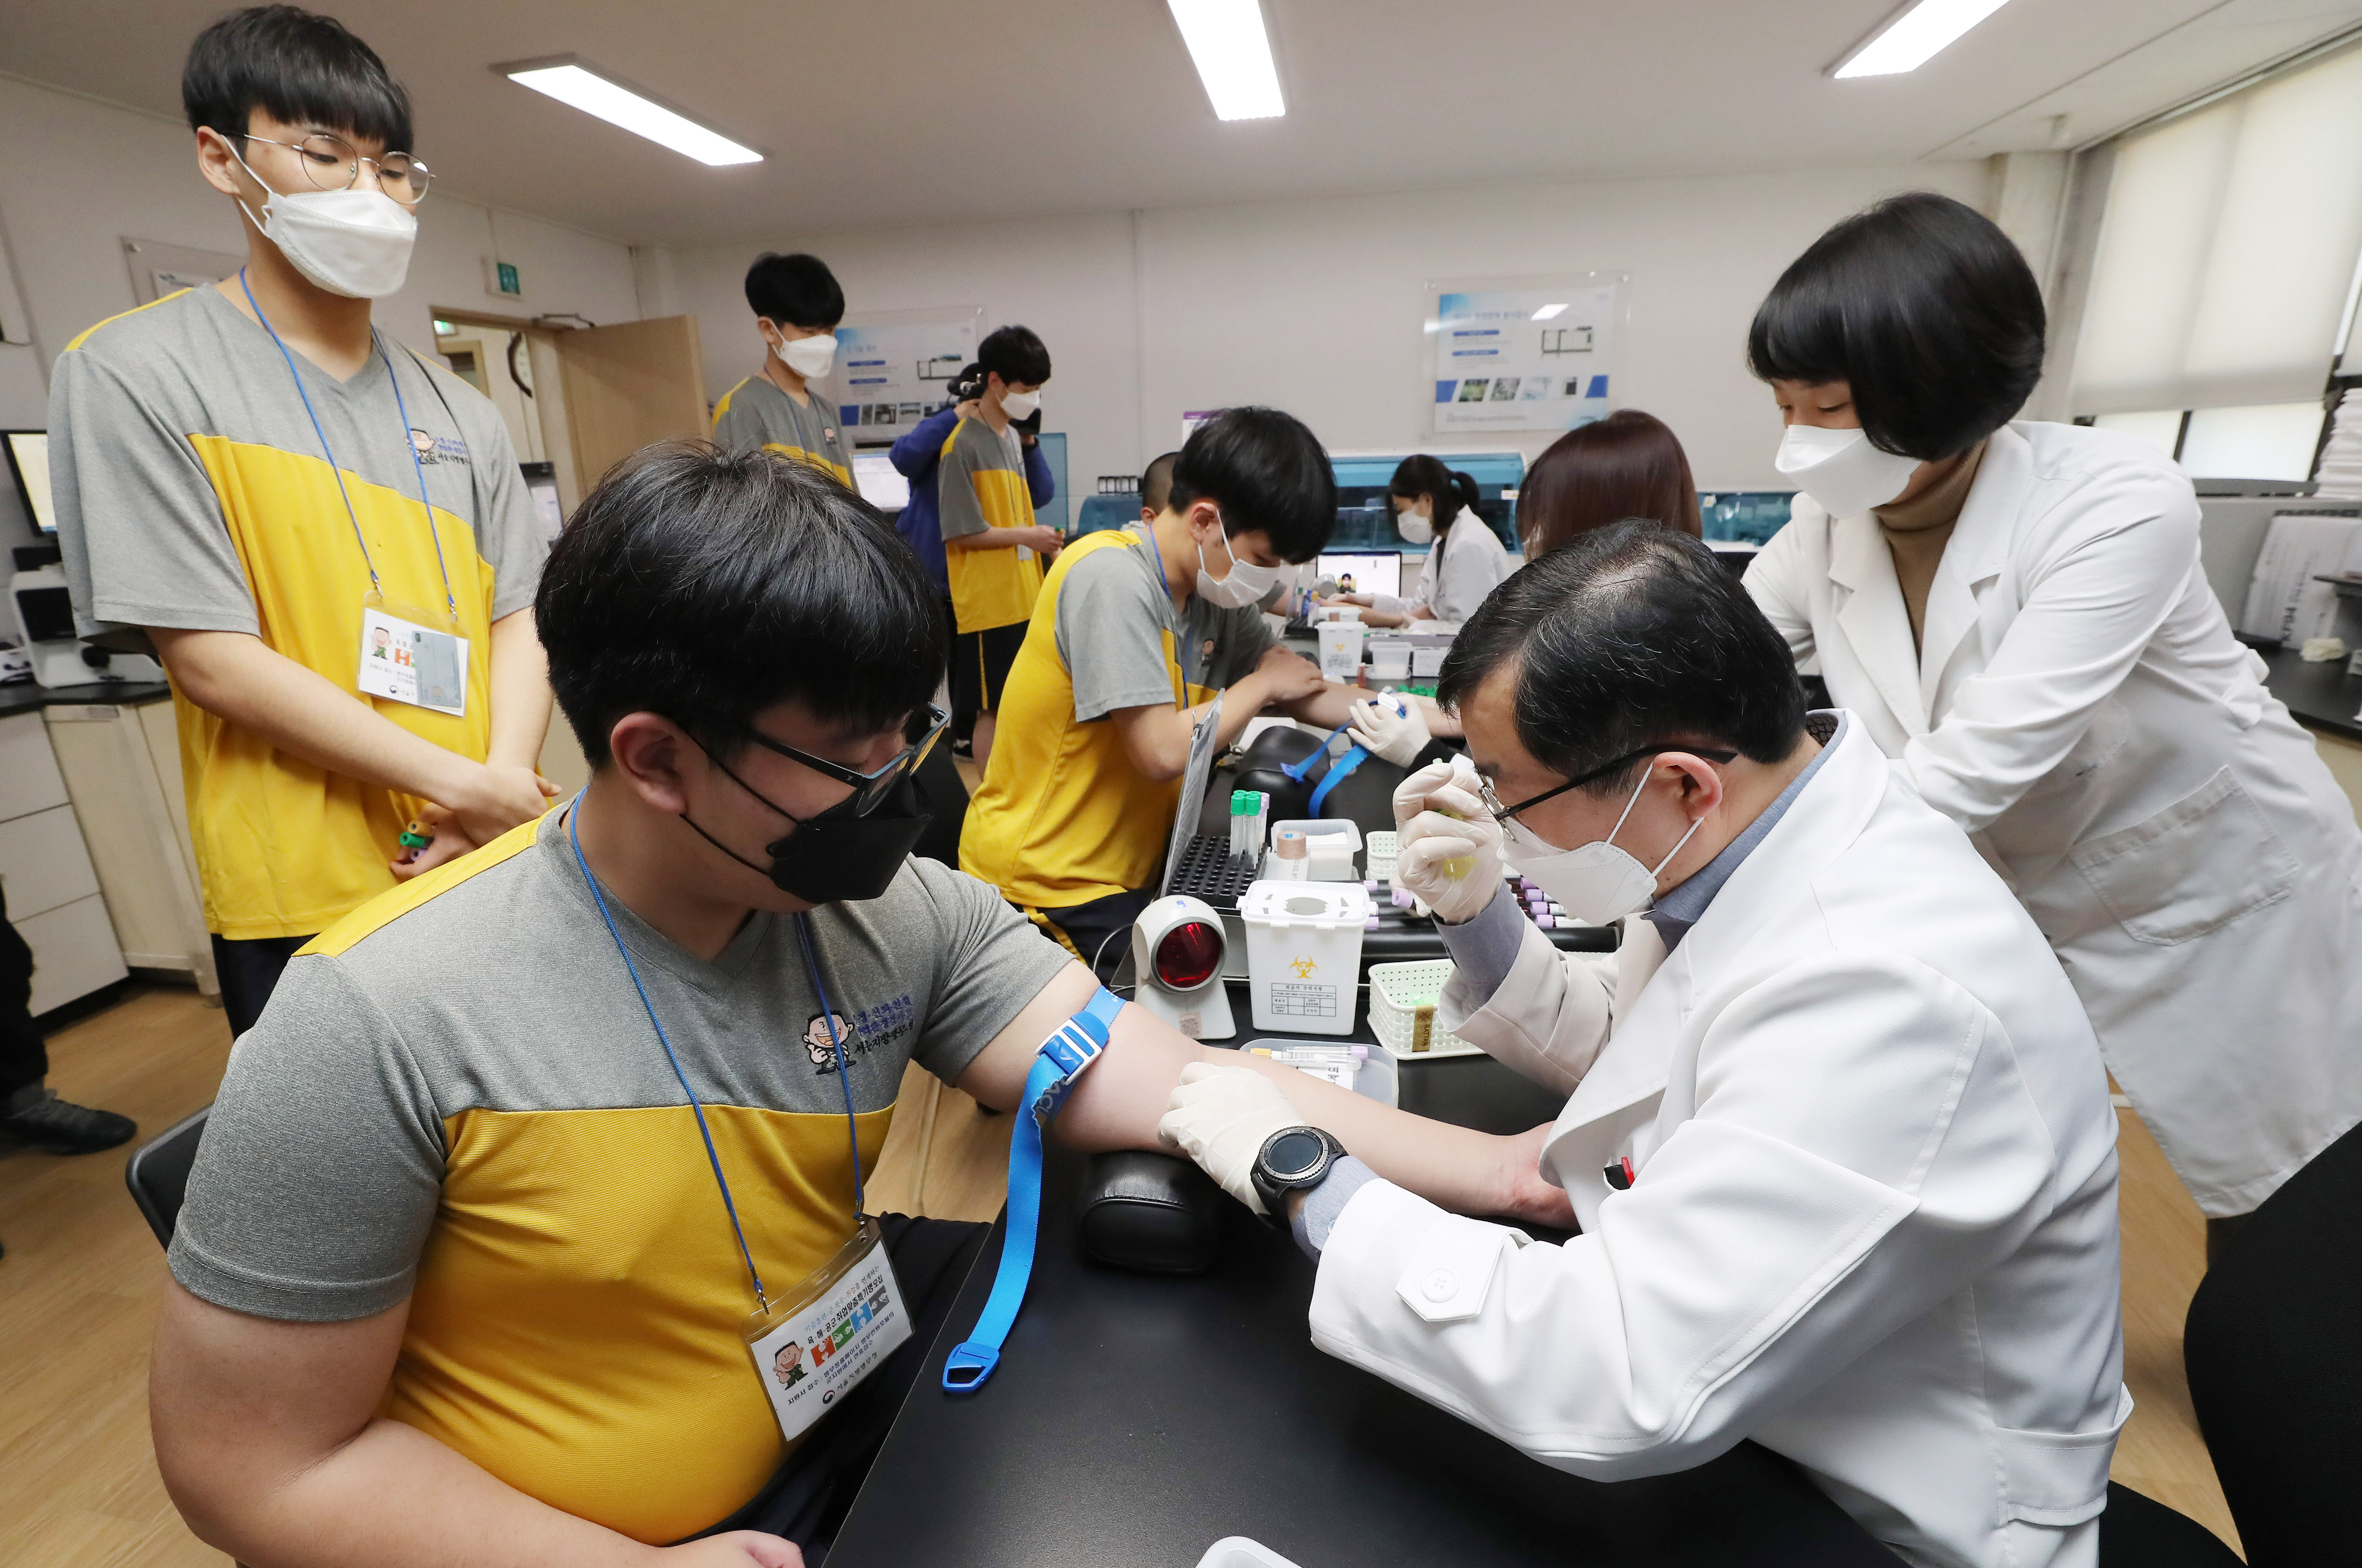 S. Korea testing 809 people for coronavirus, cases unchanged at 27